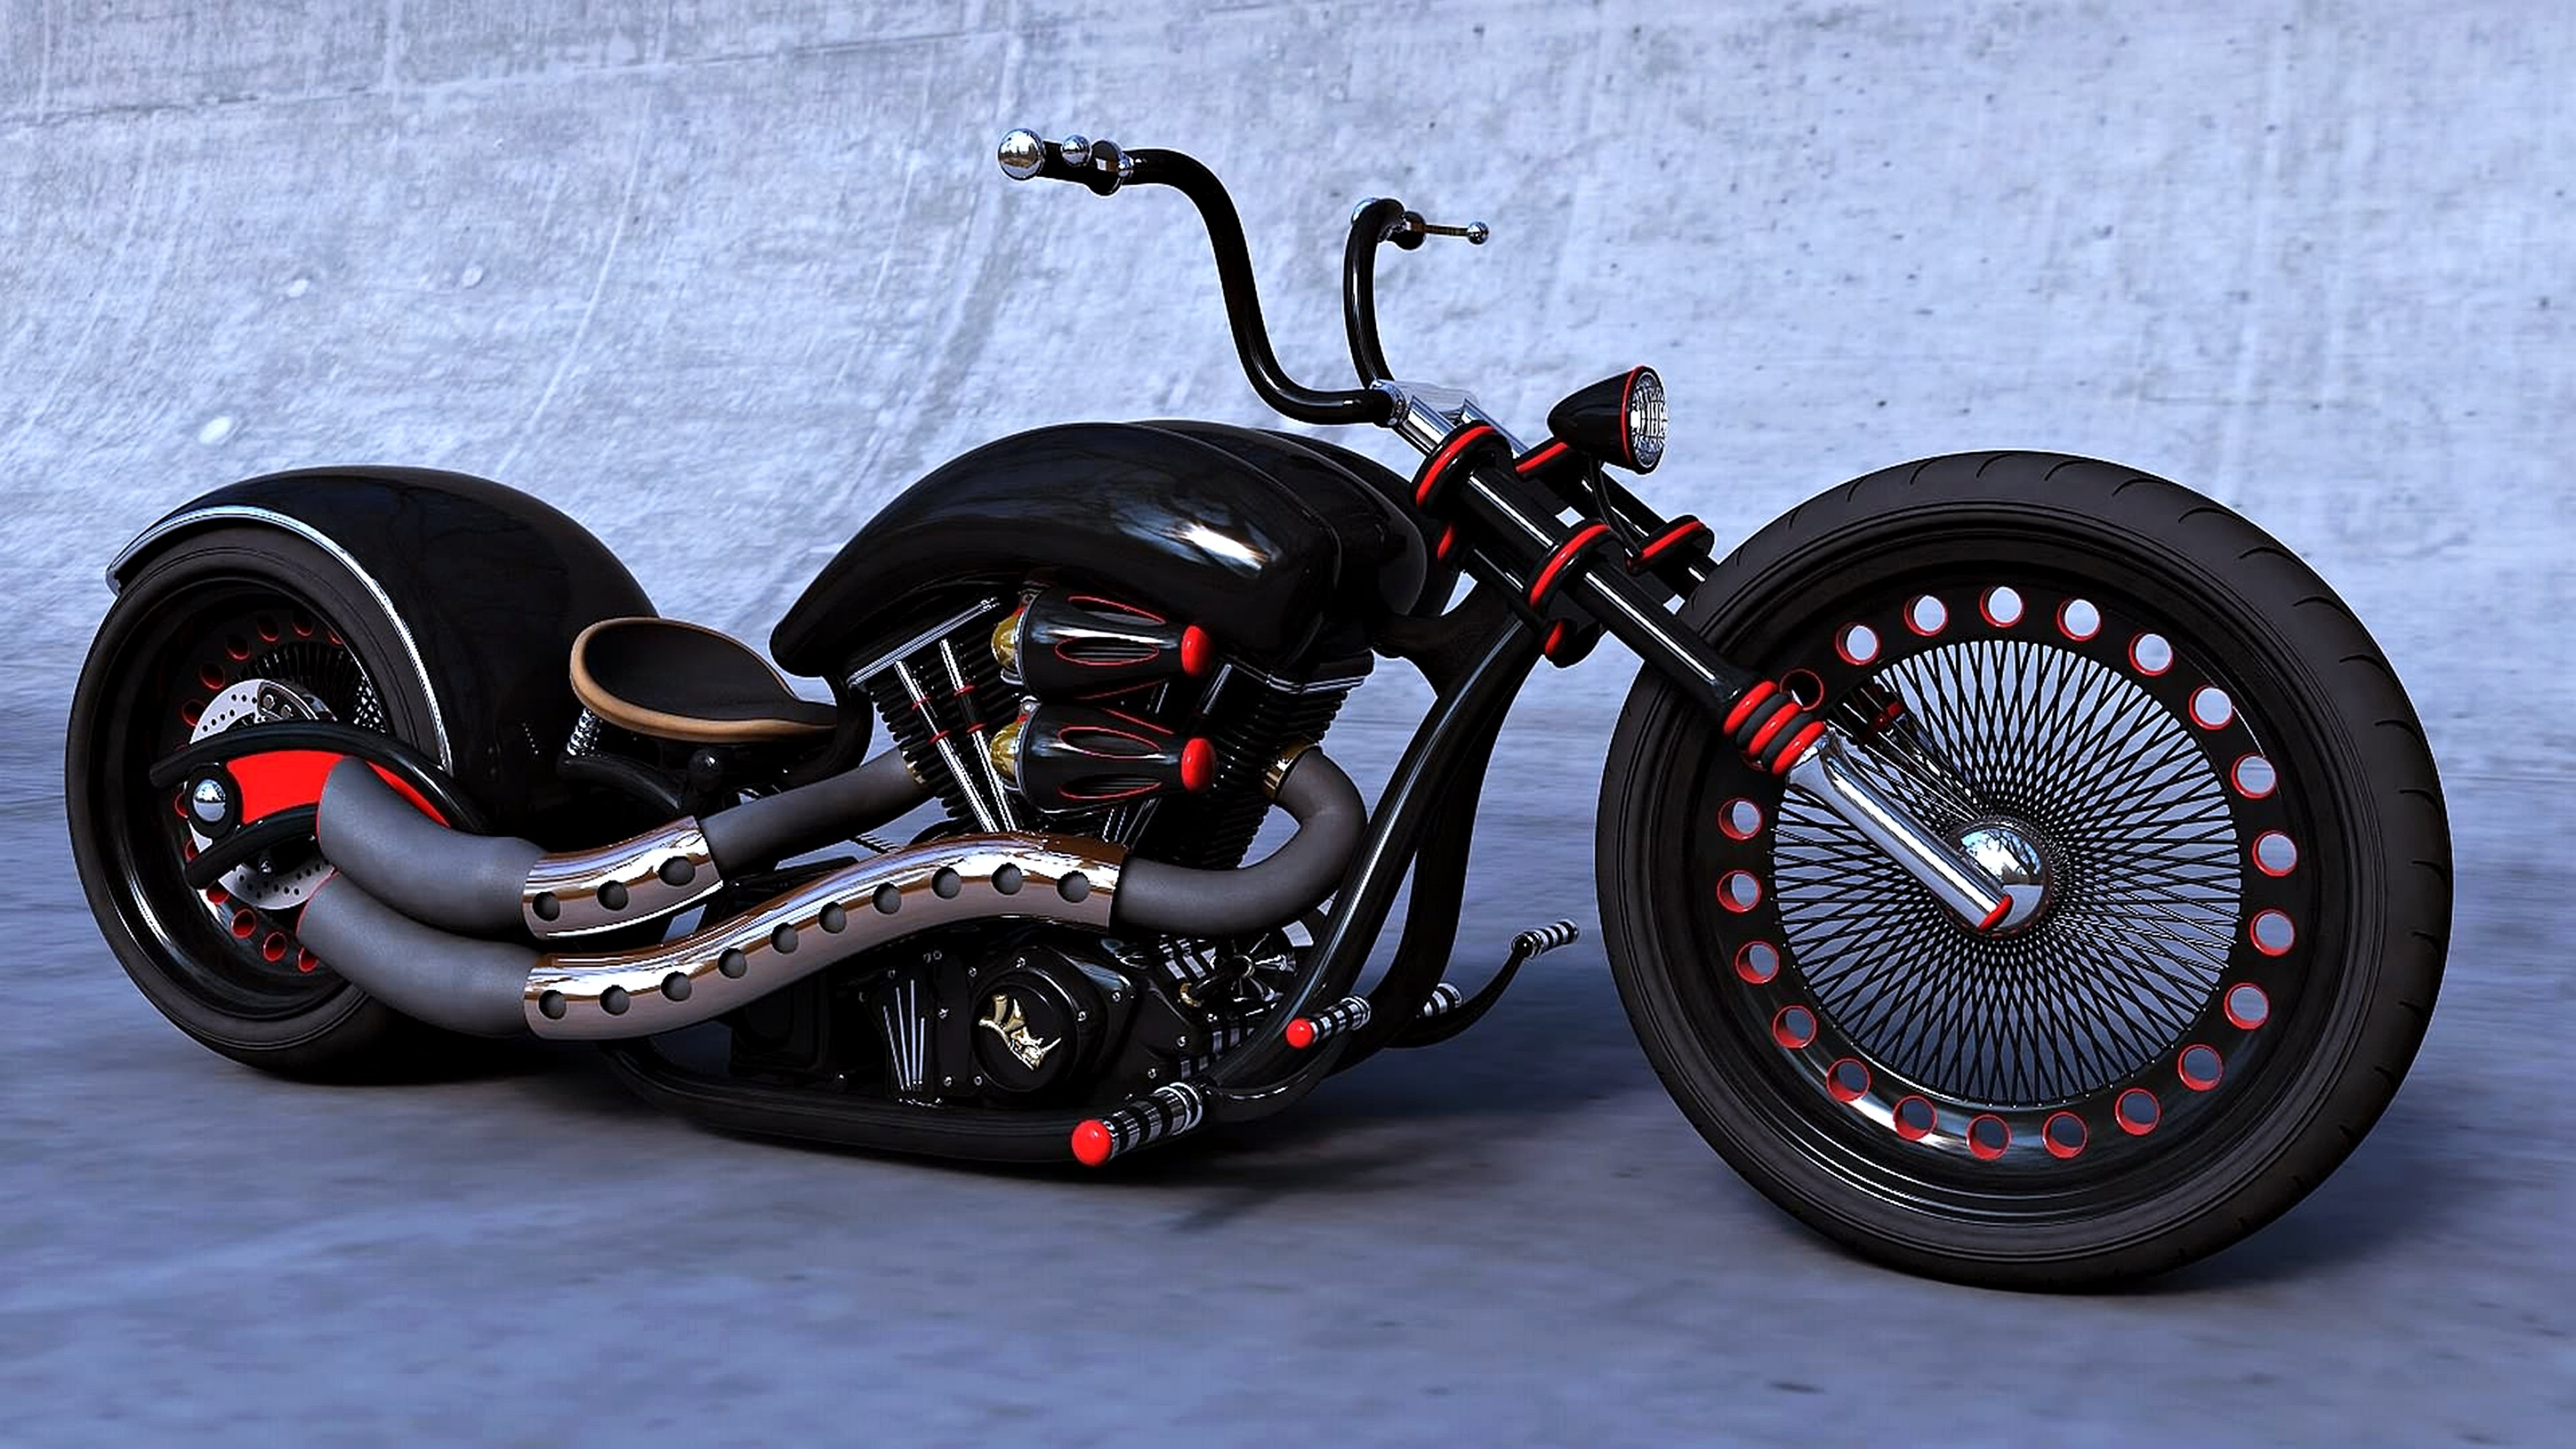 chopper, Motocycle, Black, Super, Force, Noise, Motors, Speed, Harley davidson Wallpaper